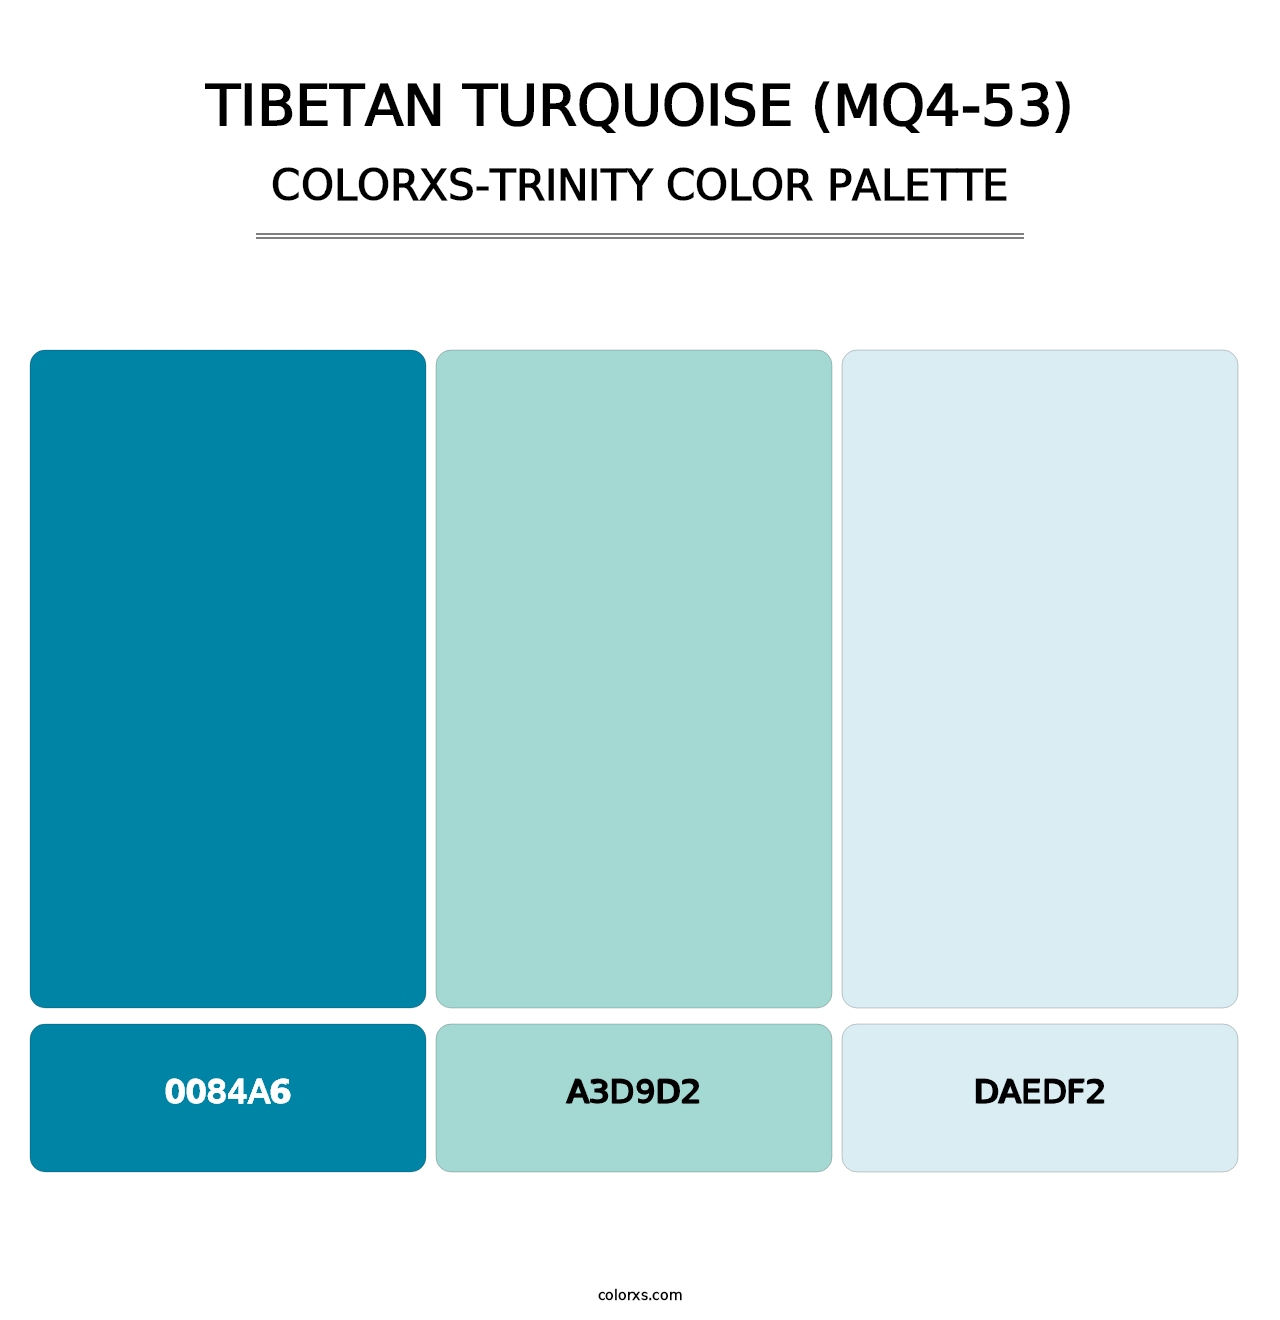 Tibetan Turquoise (MQ4-53) - Colorxs Trinity Palette